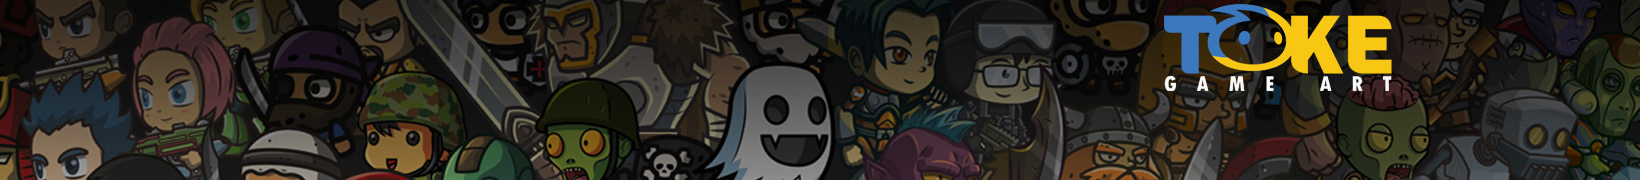 Toke Game Art's profile banner